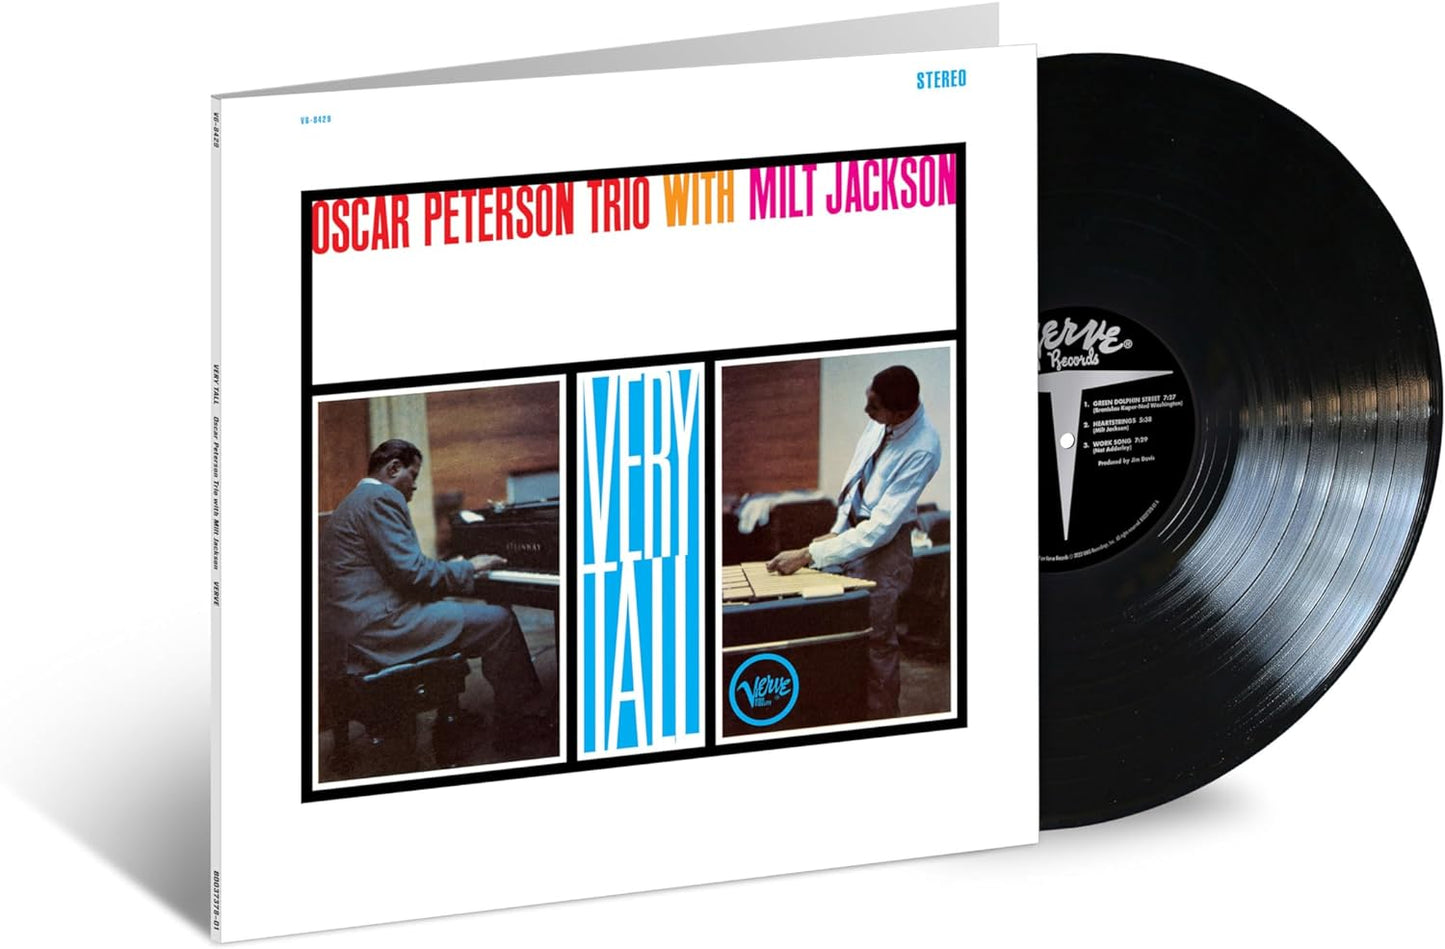 LP - Oscar Peterson Trio with Milt Jackson -  Very Tall (Acoustic Sound)